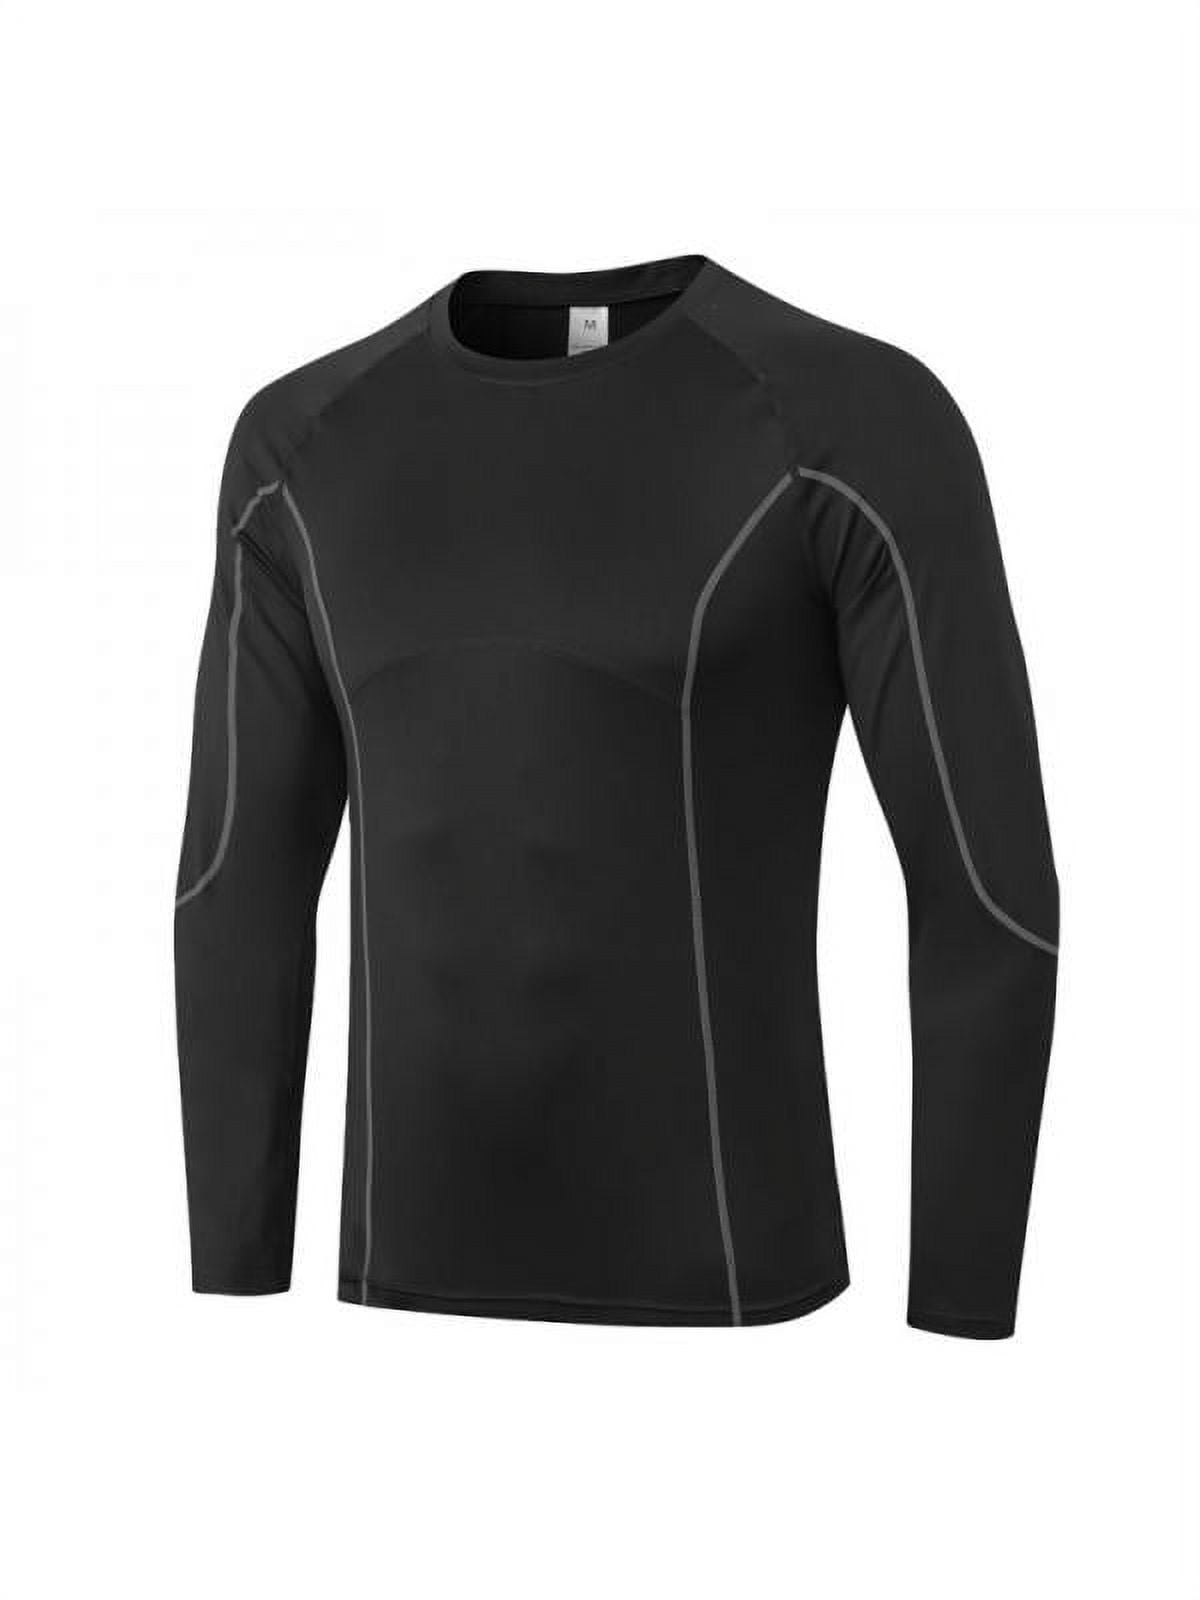 Men's Long Sleeve Shirts UPF 50+ UV Sun Protection Shirt for Hiking Running  Swim Workout Rash Guard Tee